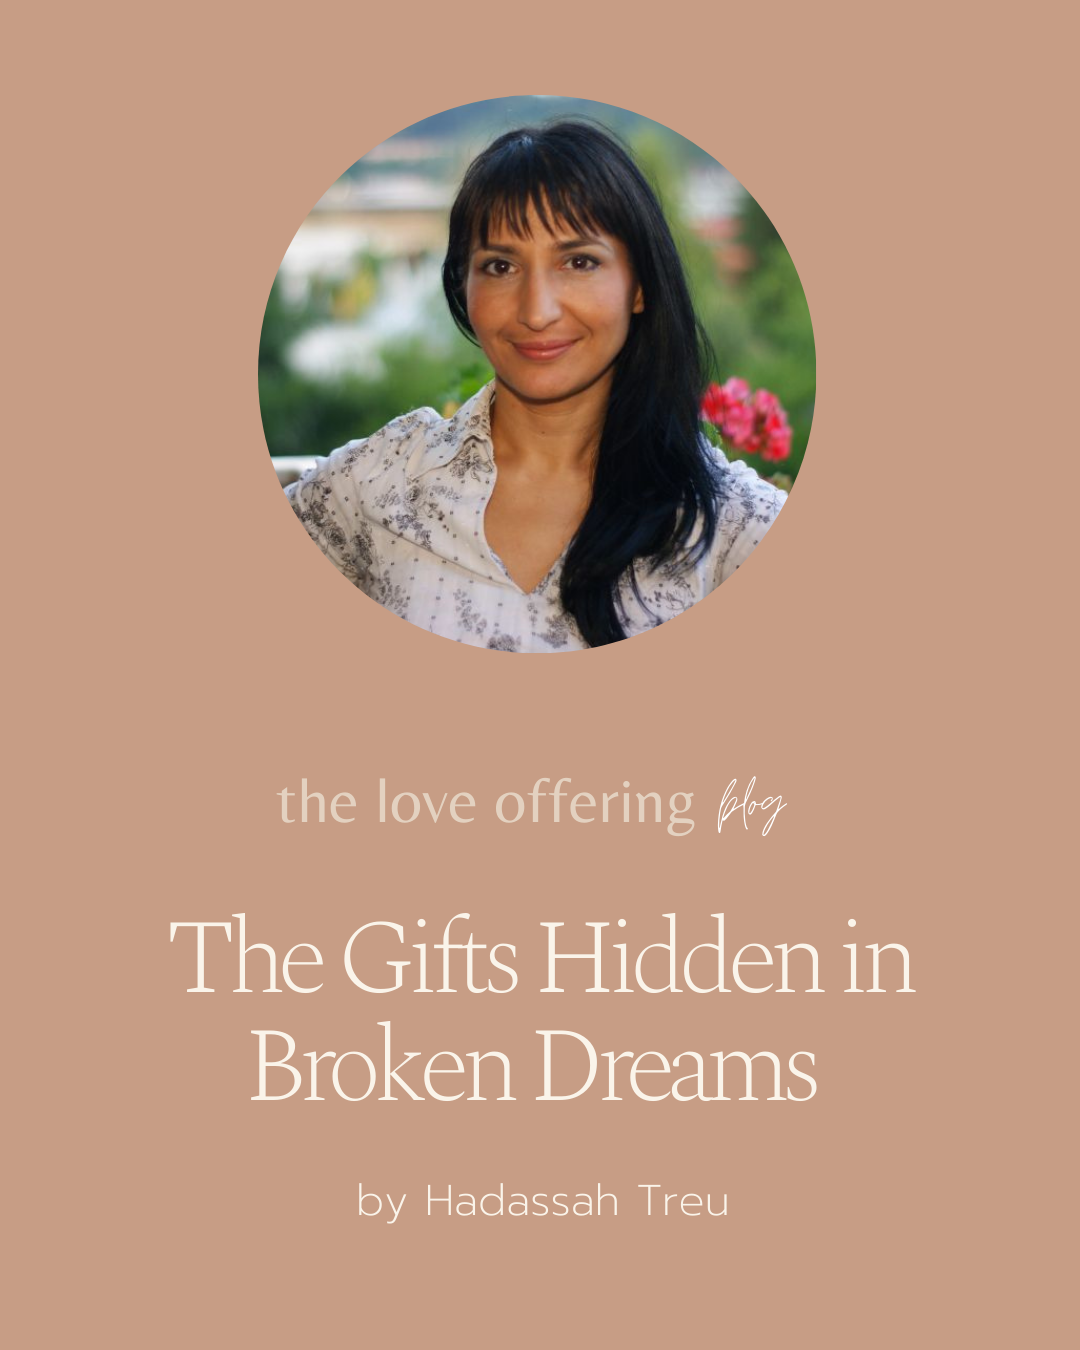 The Gifts Hidden in Broken Dreams by Hadassah Treu